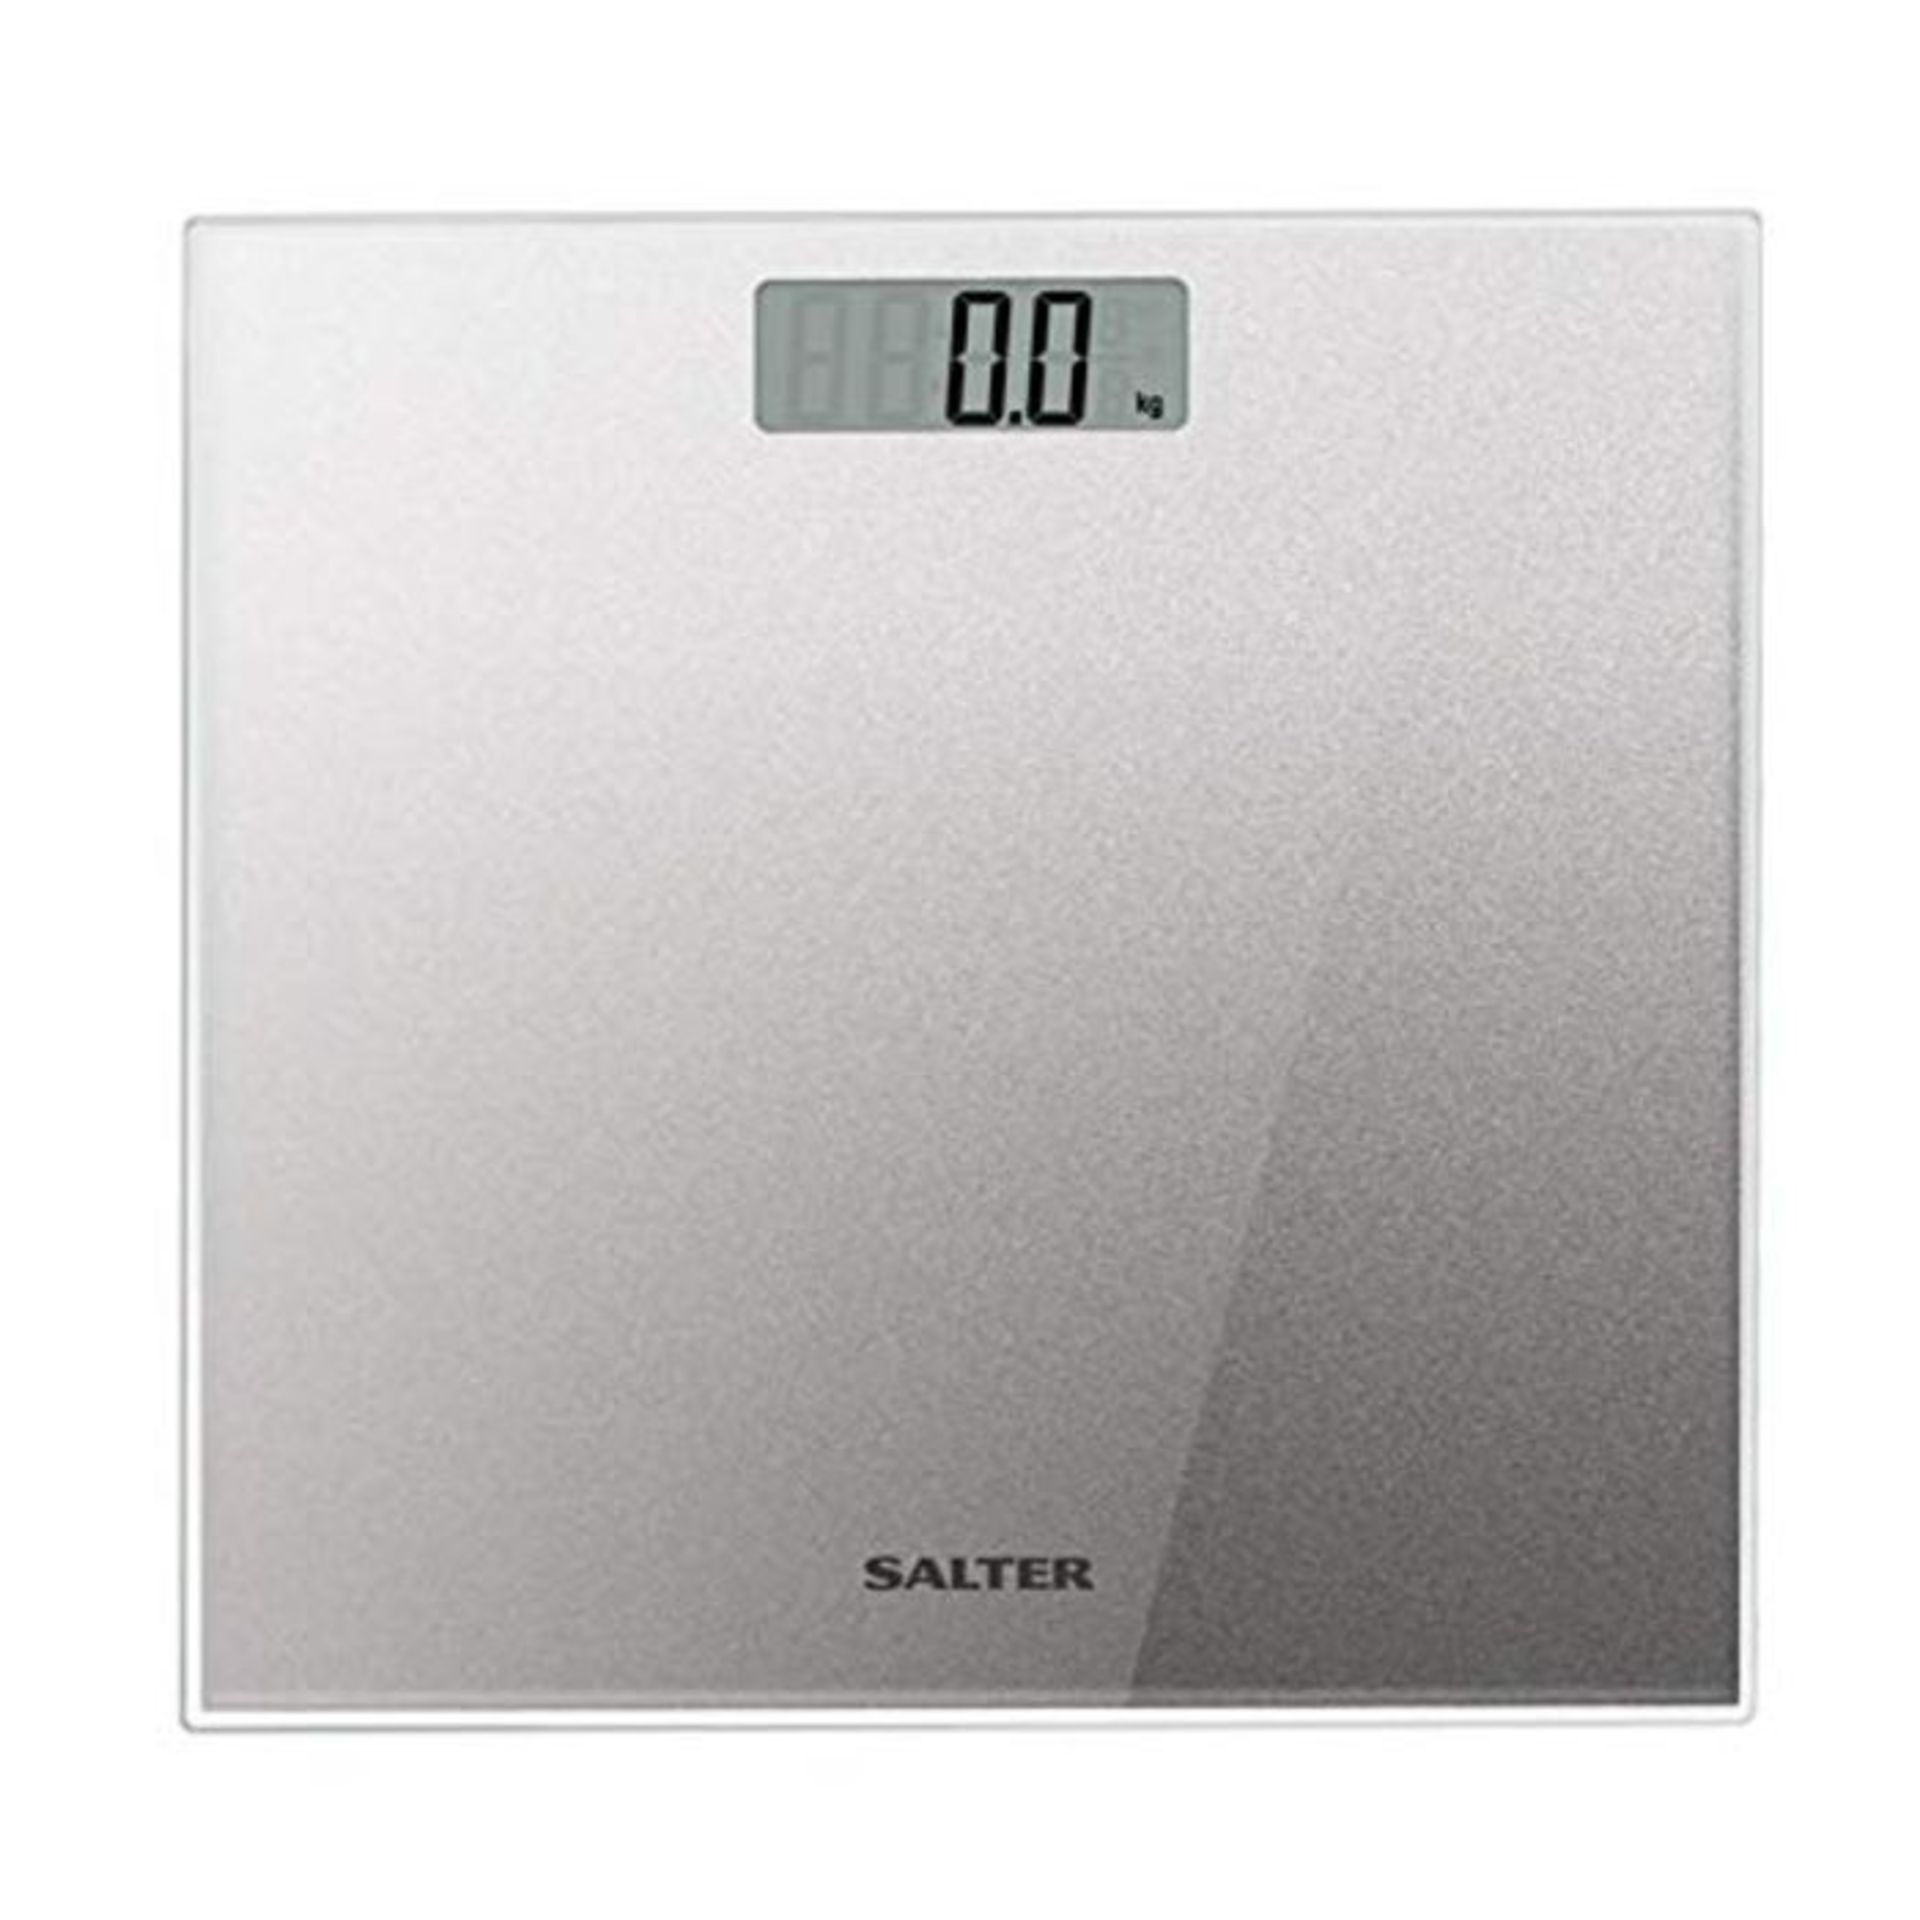 Salter Glitter Bathroom Scales  Supersize Digital Display Electronic Scale for Prec